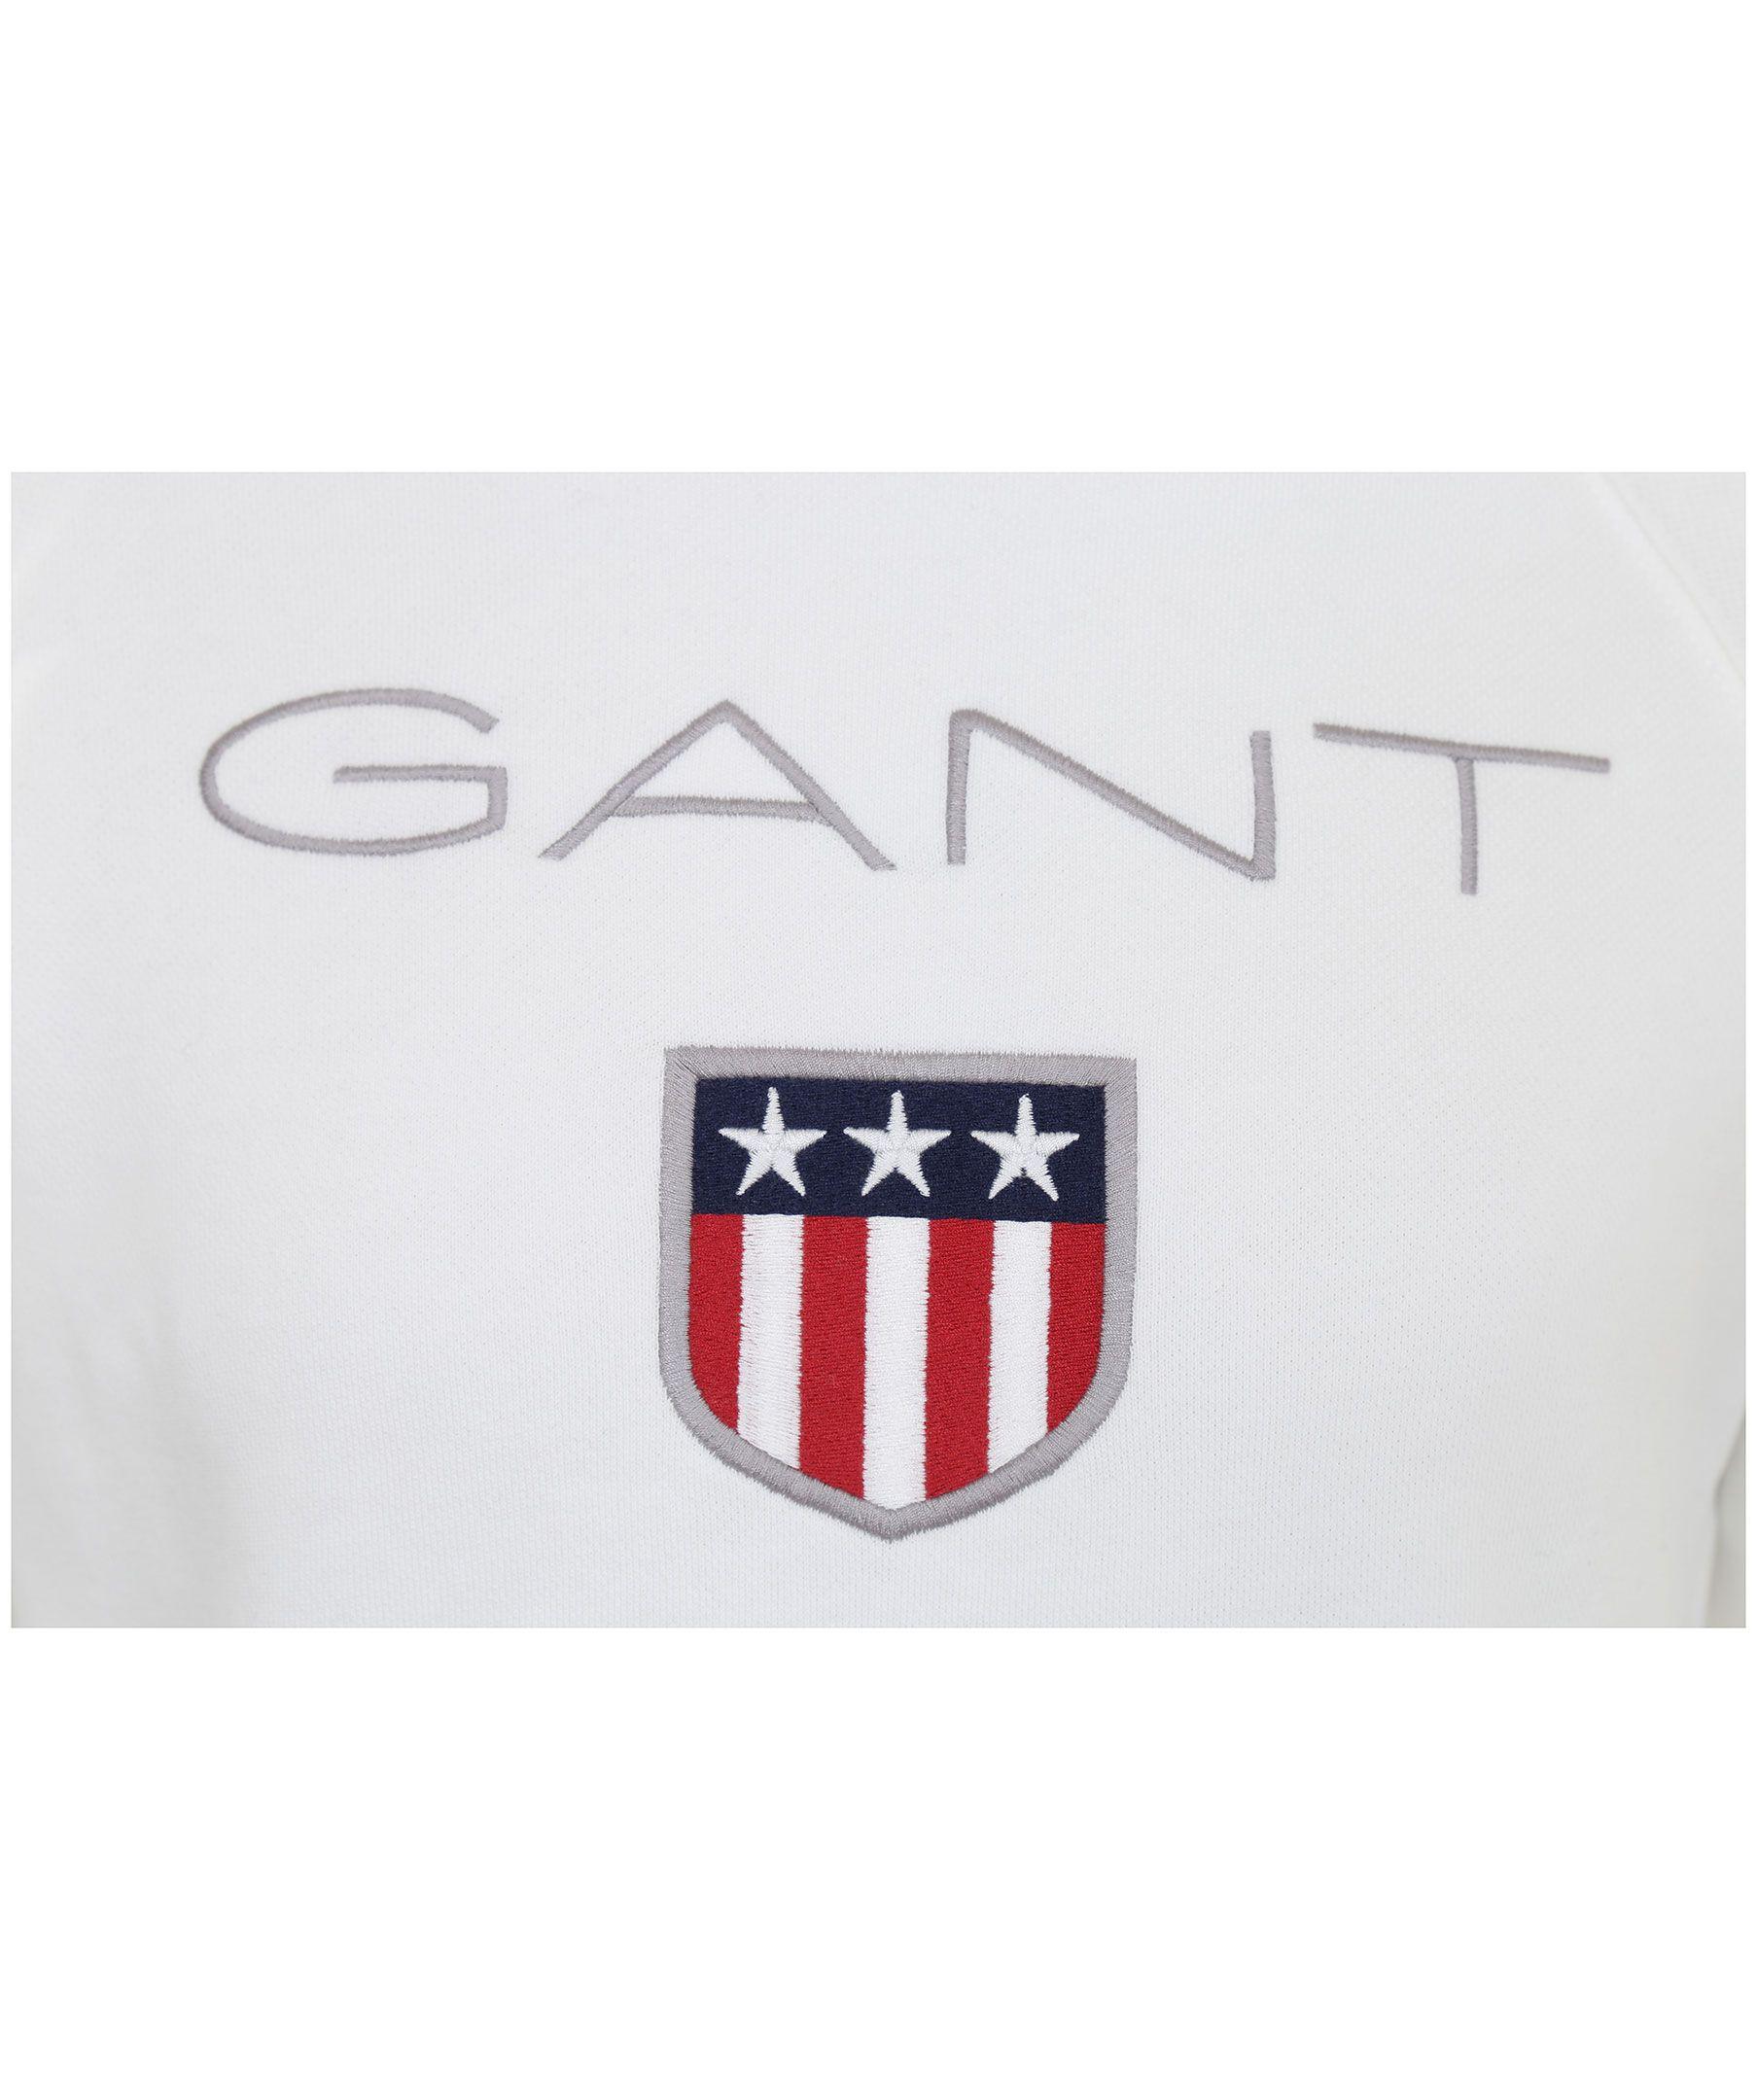 Gant Logo - Junior Gant Shield Logo